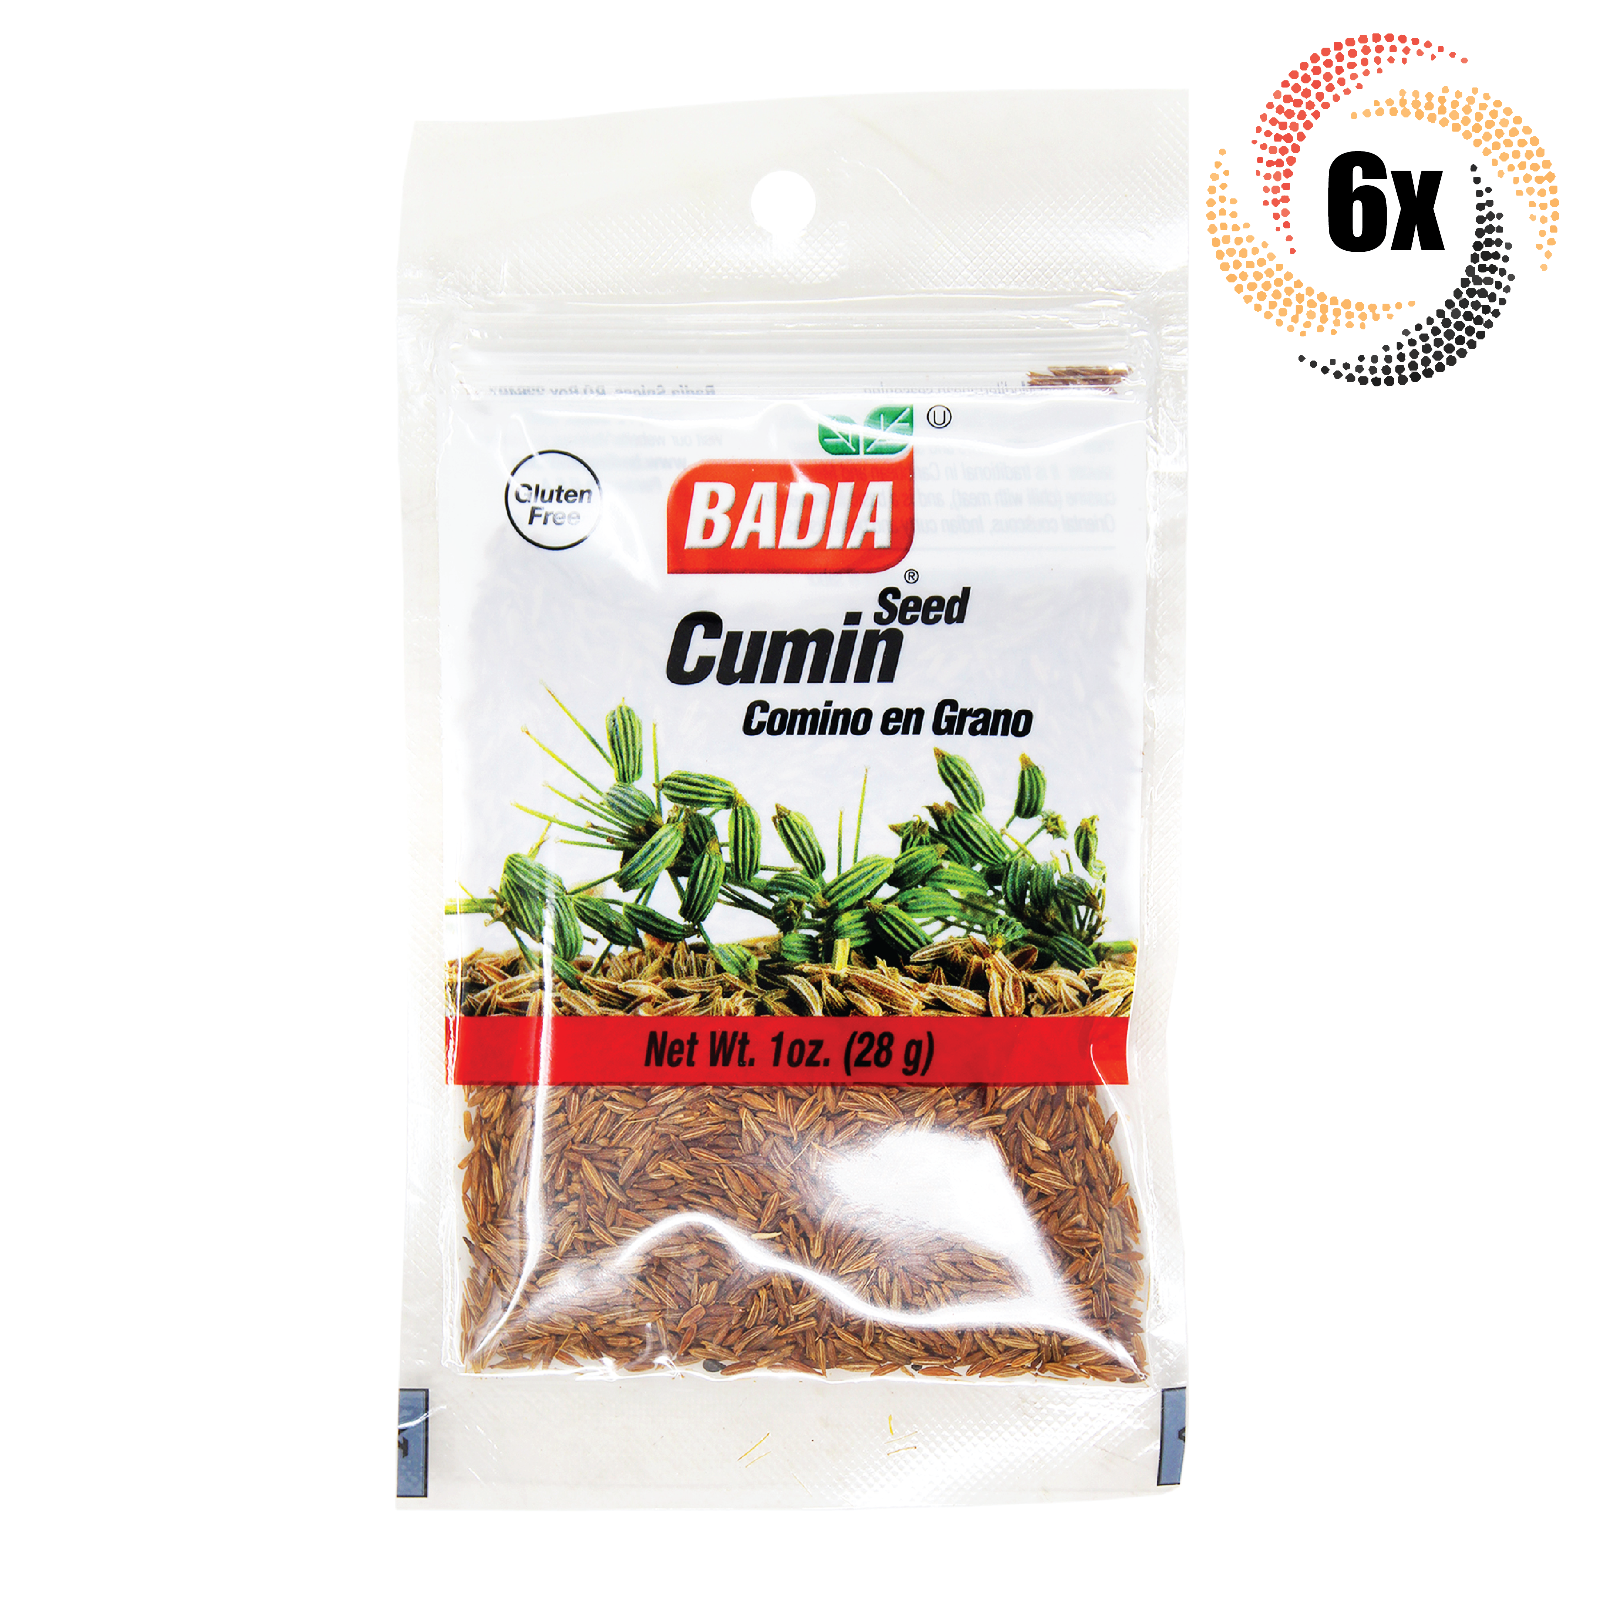 6x Bags Badia Cumin Seed Comino En Grano | 1oz | Gluten Free! | Fast Shipping! - $15.48